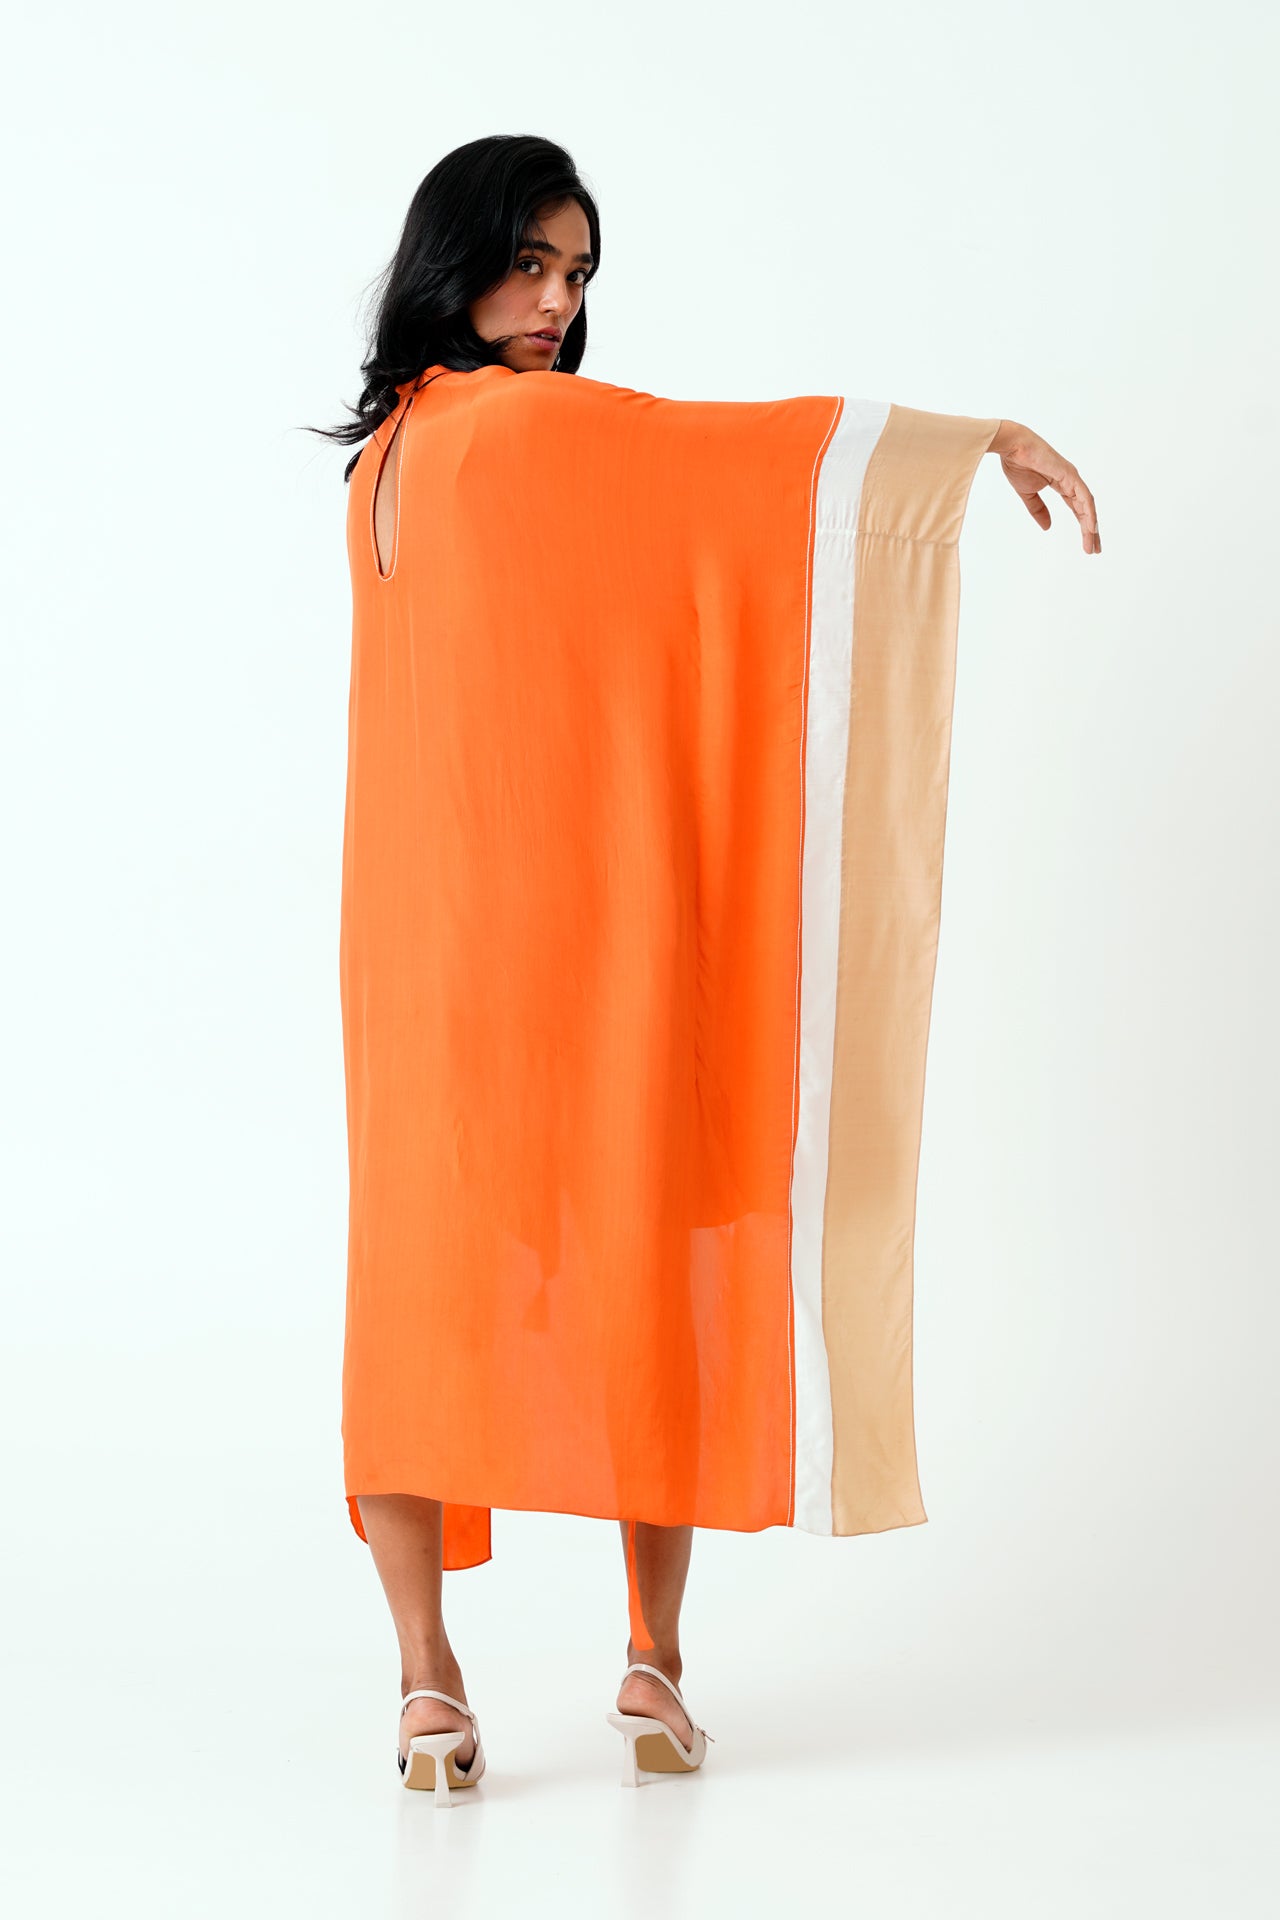 Sunset Orange Nante - Scarf Kaftan Dress